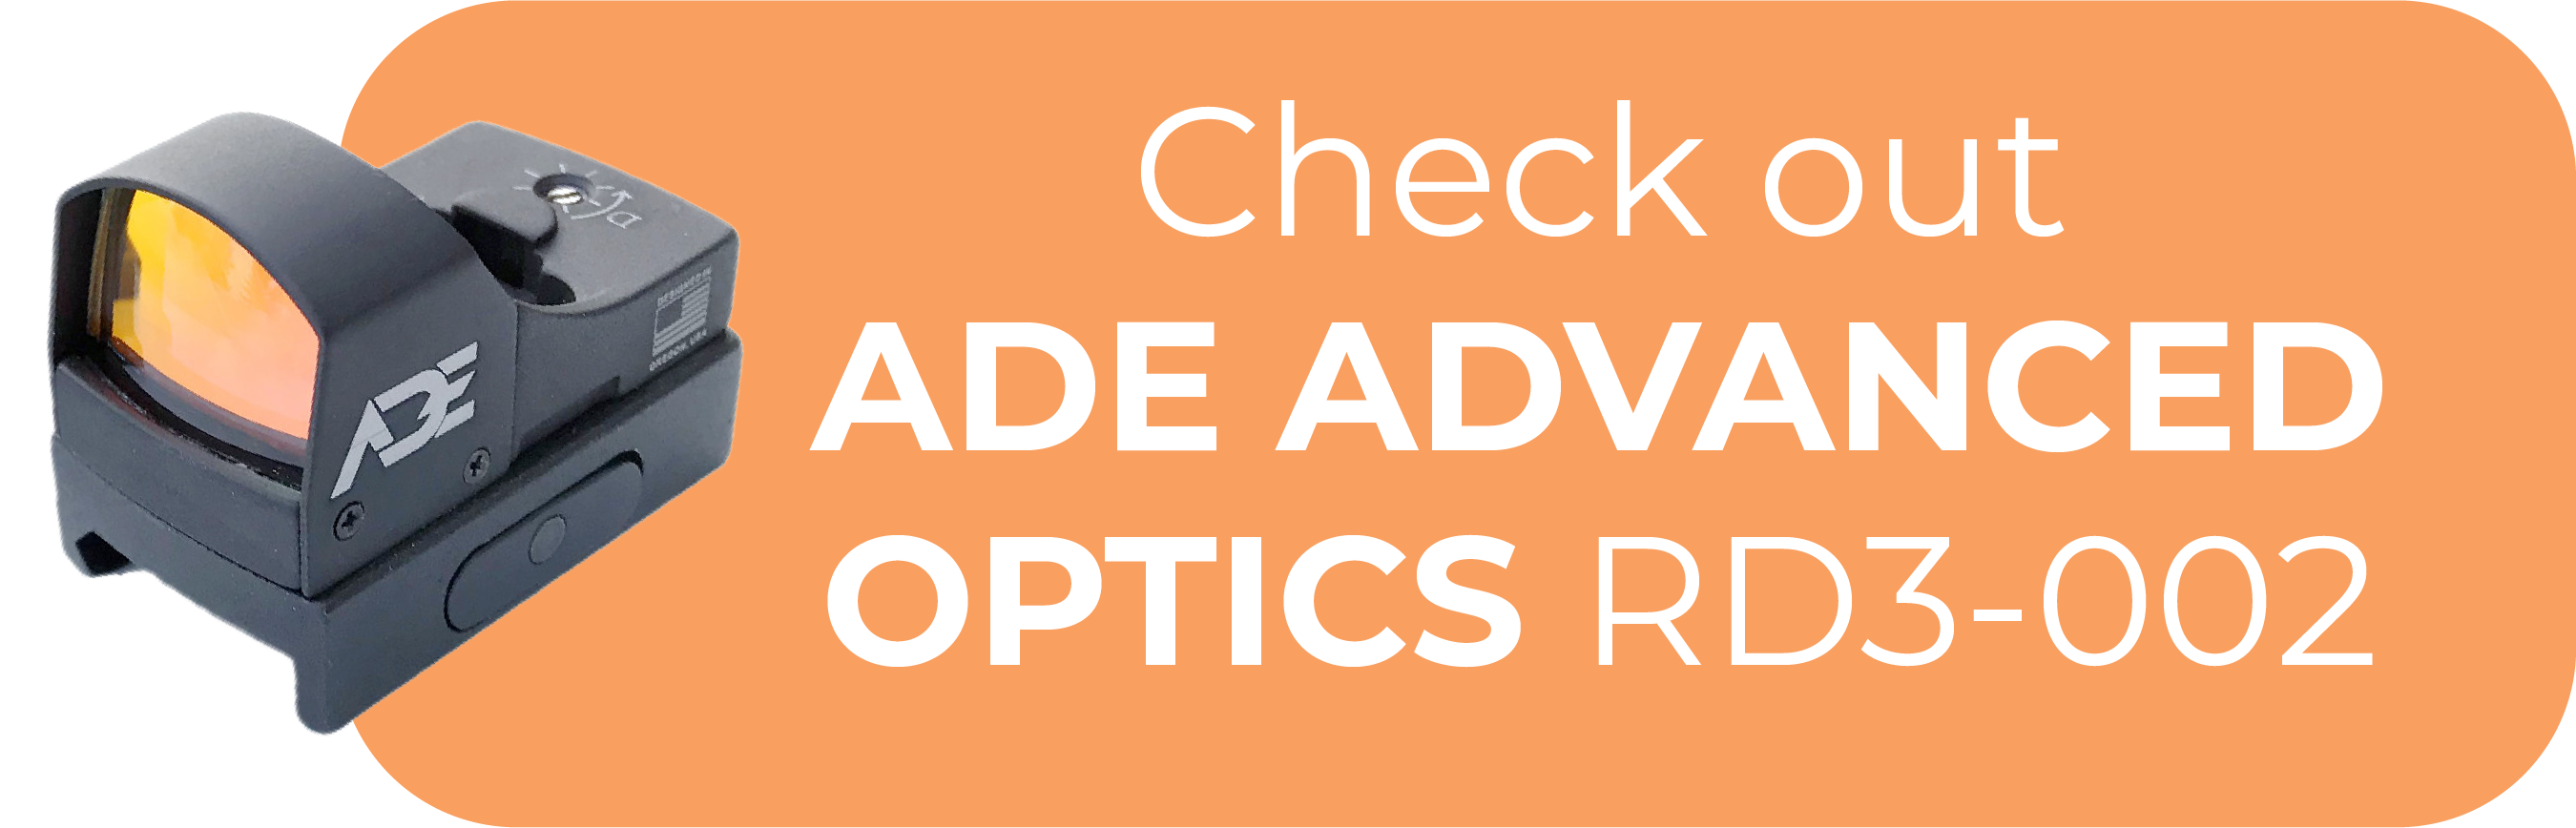 ADE Advanced Optics RD3-002 Footprint